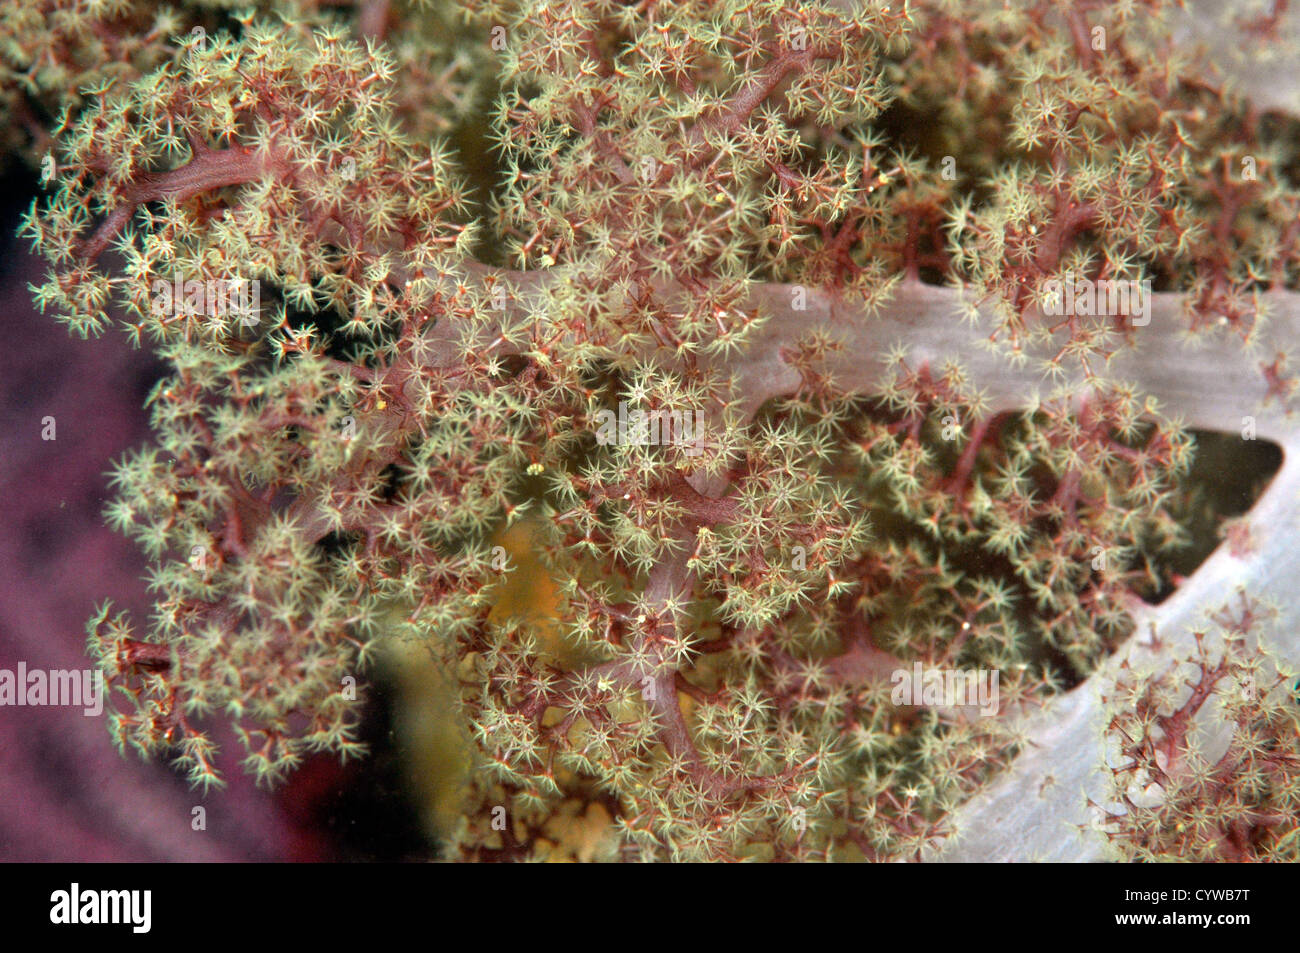 Red soft coral, Dendronephthea sp., Bitagane, Atami, Izu peninsula, Japan Stock Photo